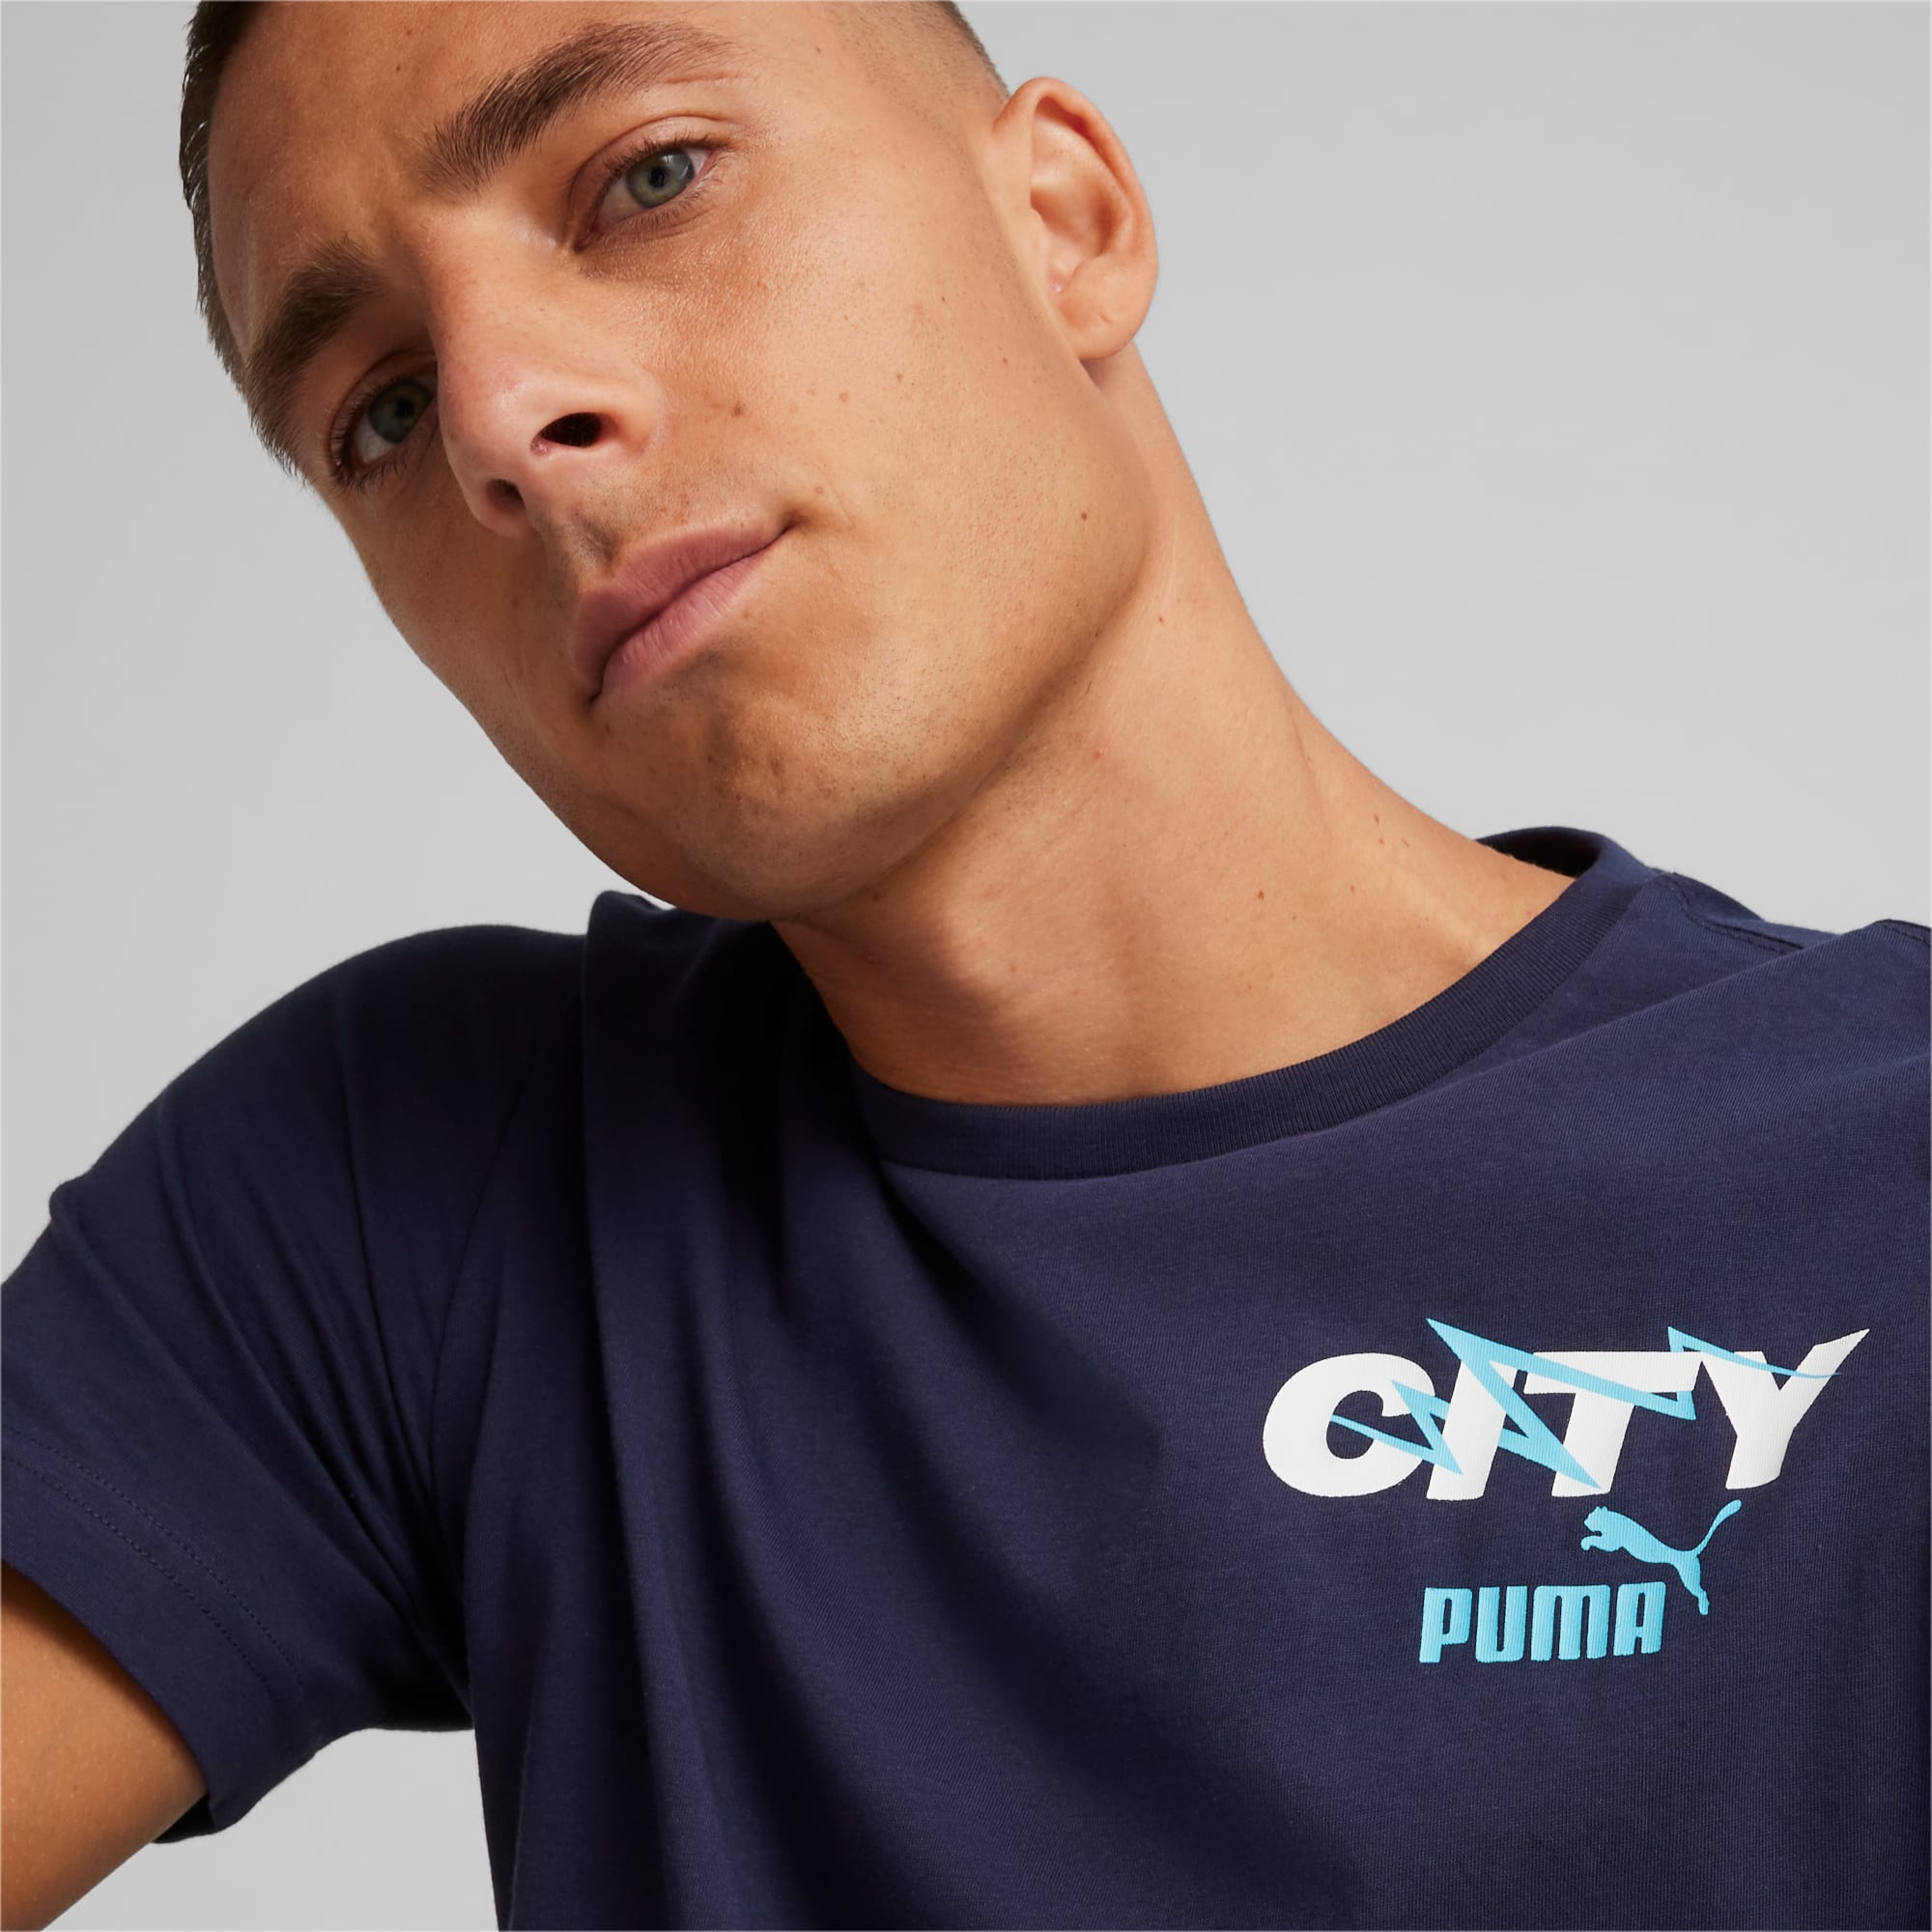 PUMA Manchester City Ftblicons T-shirt Voor Heren, Wit/Blauw